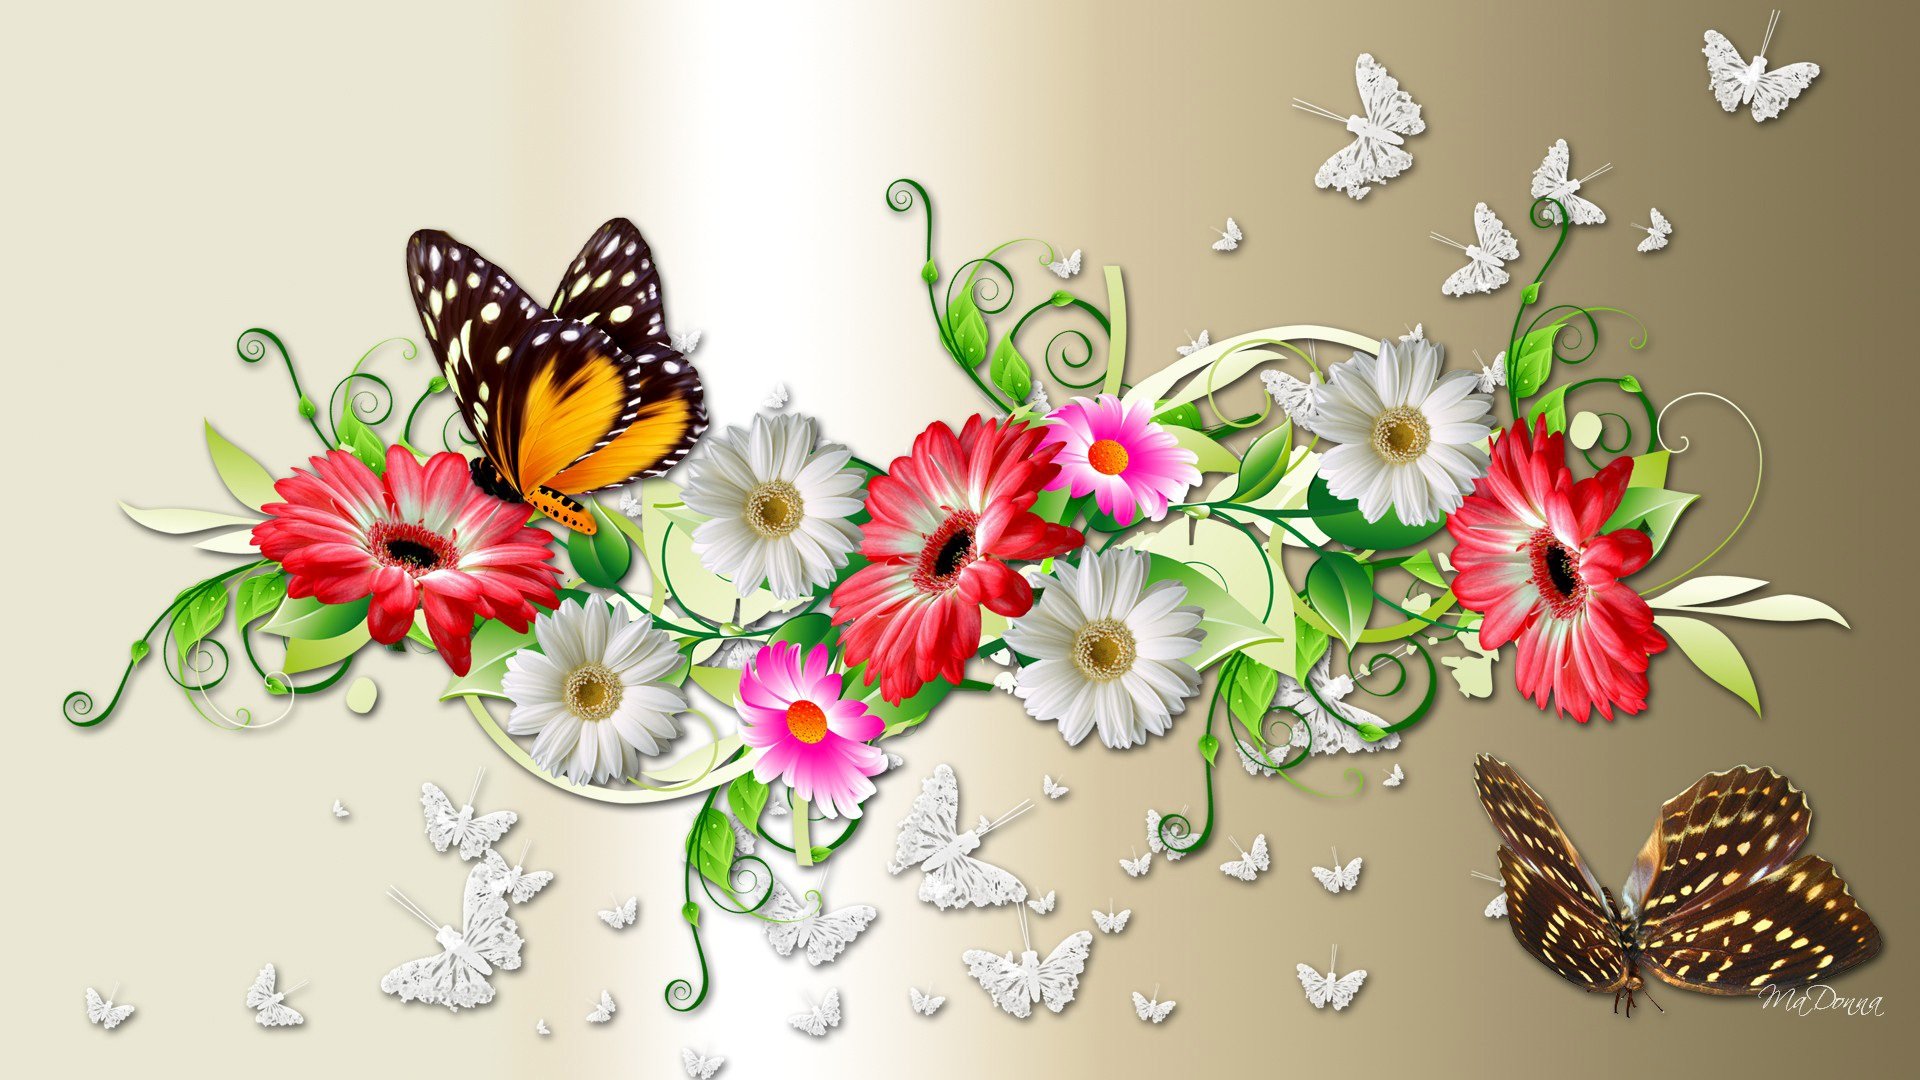 Бабочка обложка. Бабочка на цветке. Обои на рабочий стол бабочки. Красивый фон с бабочками. Картинки цветов и бабочек.